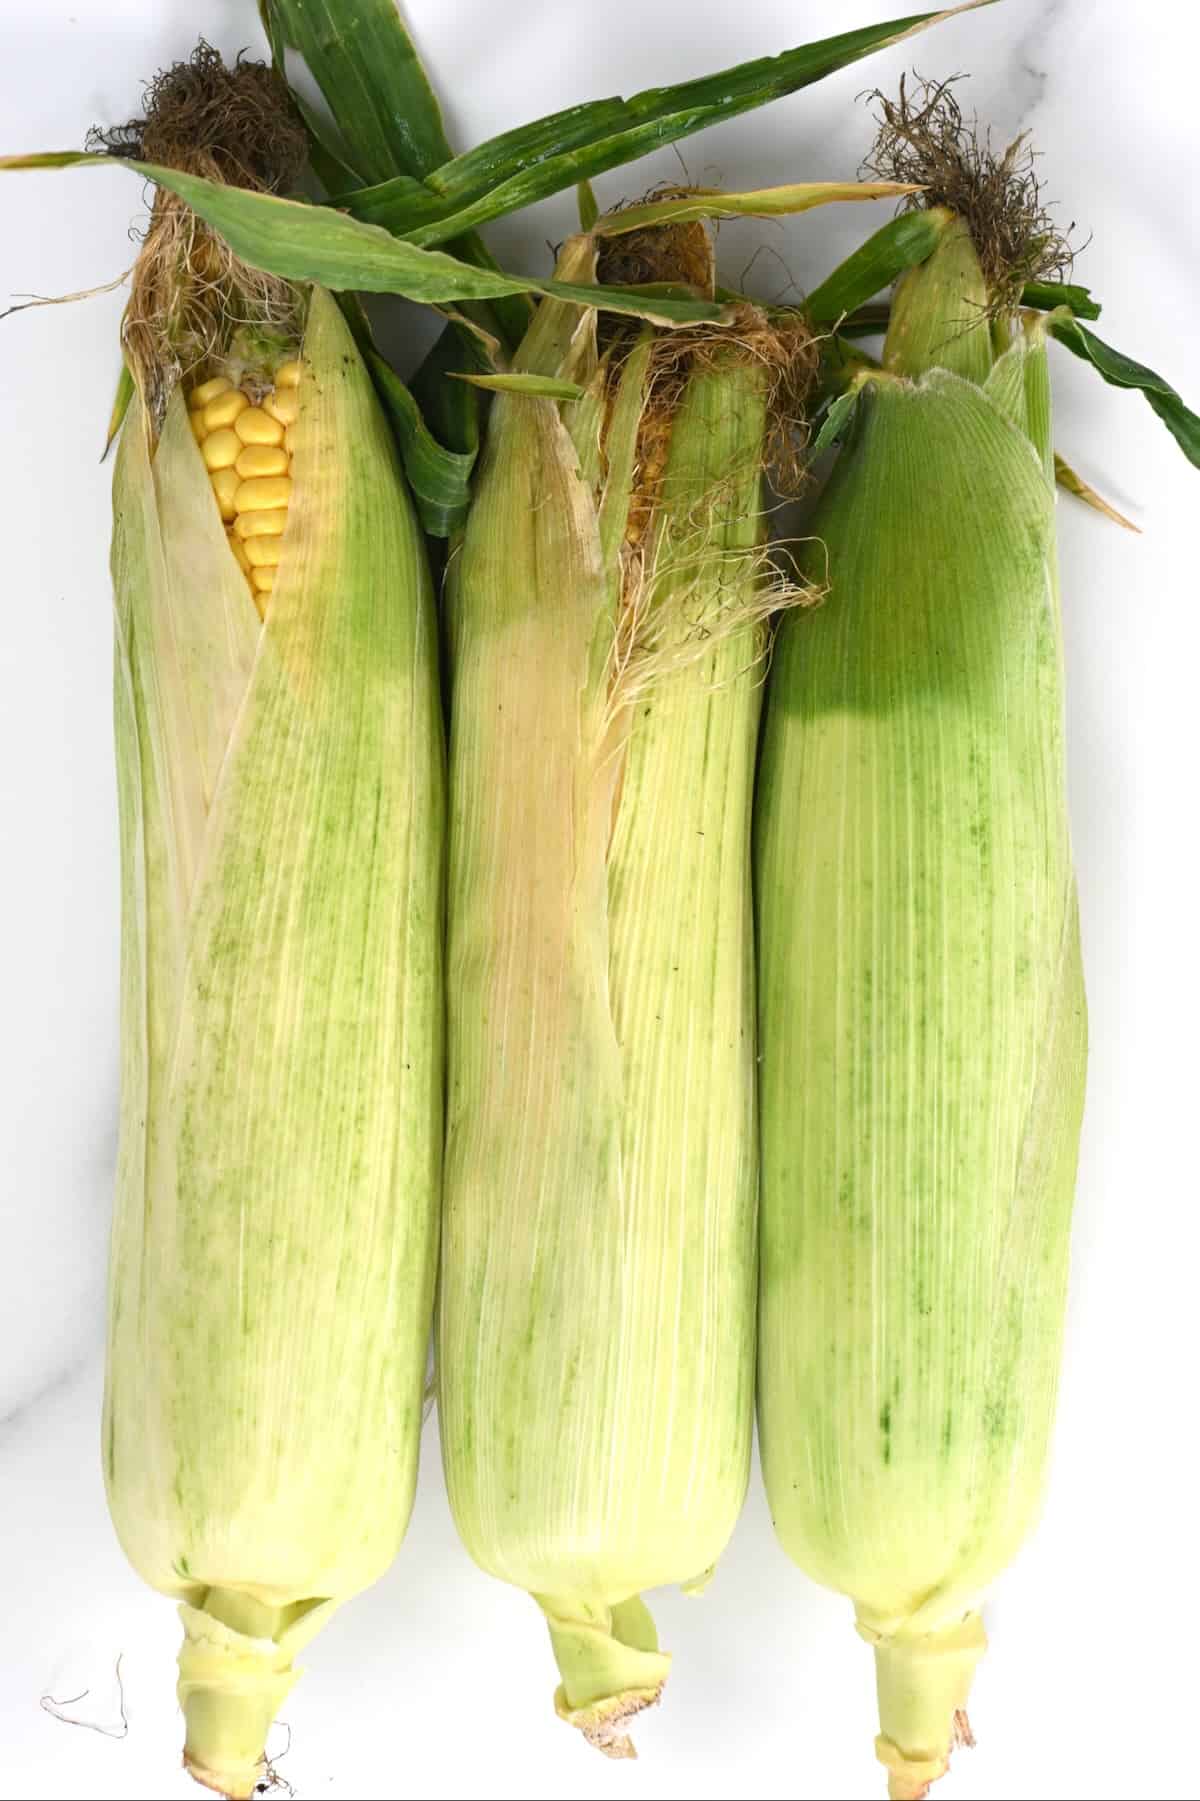 Three corns in husk